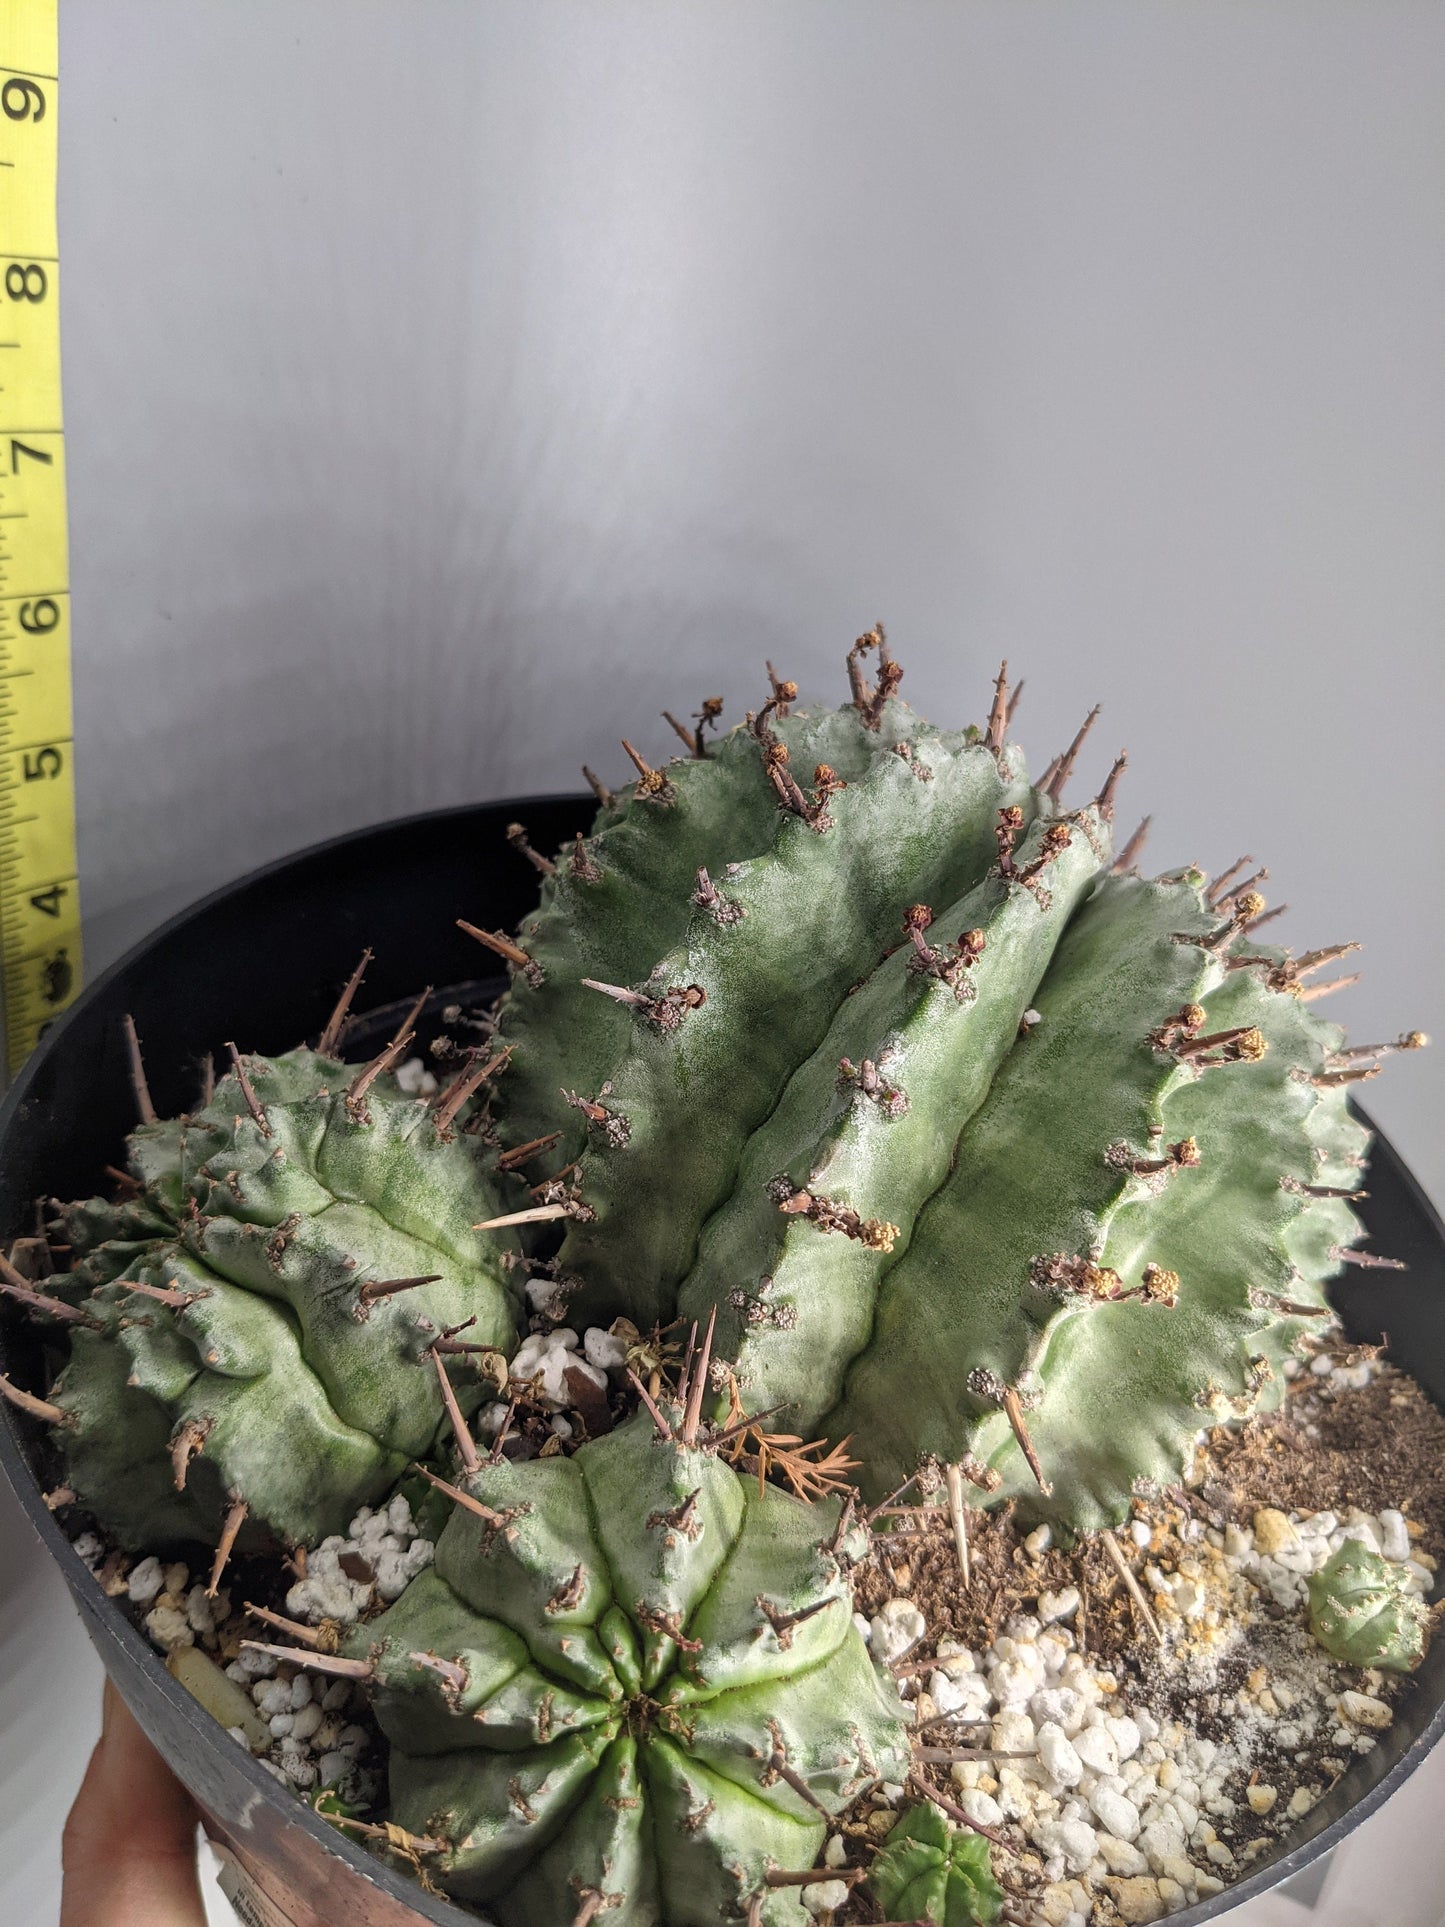 Major Hova RARE Succulent Cactus Euphoria horrida major nova Cactus Cacti Real Live Plant